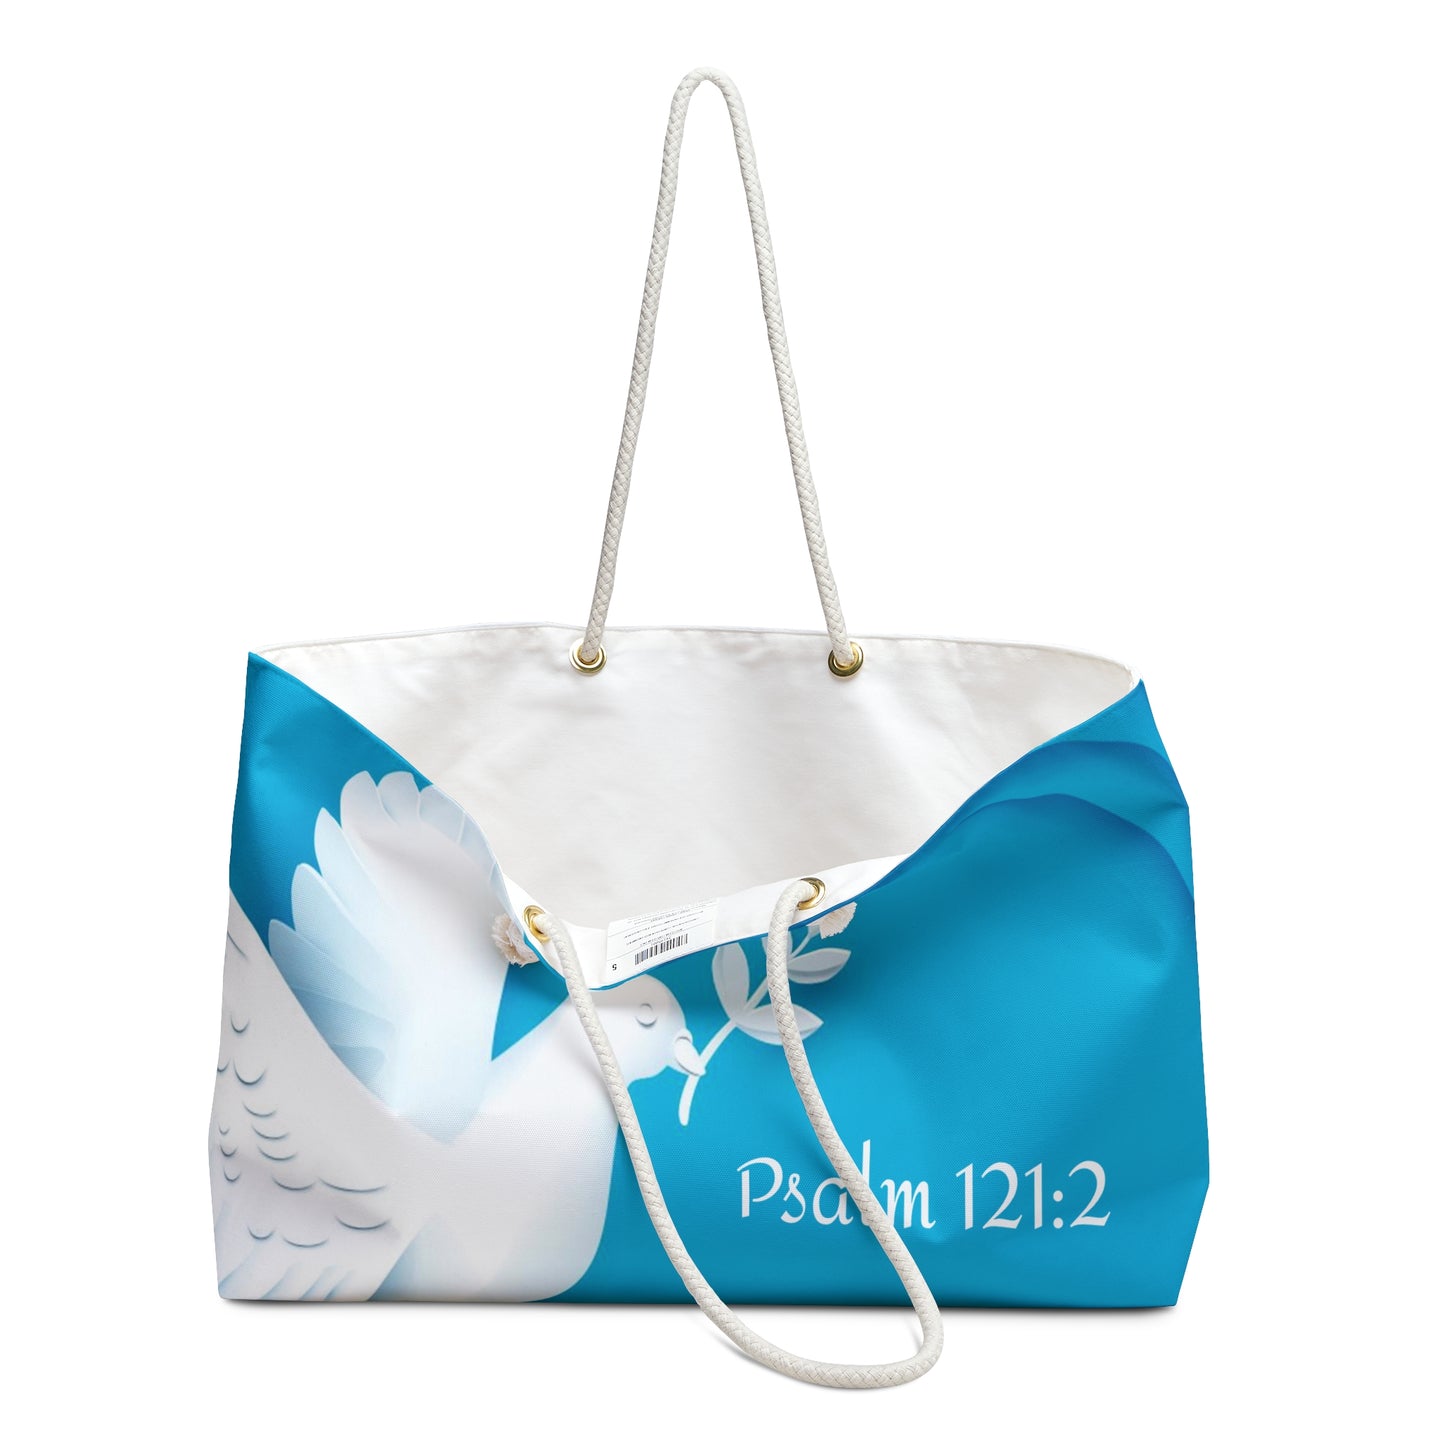 Psalm 121:2 Tote Bag